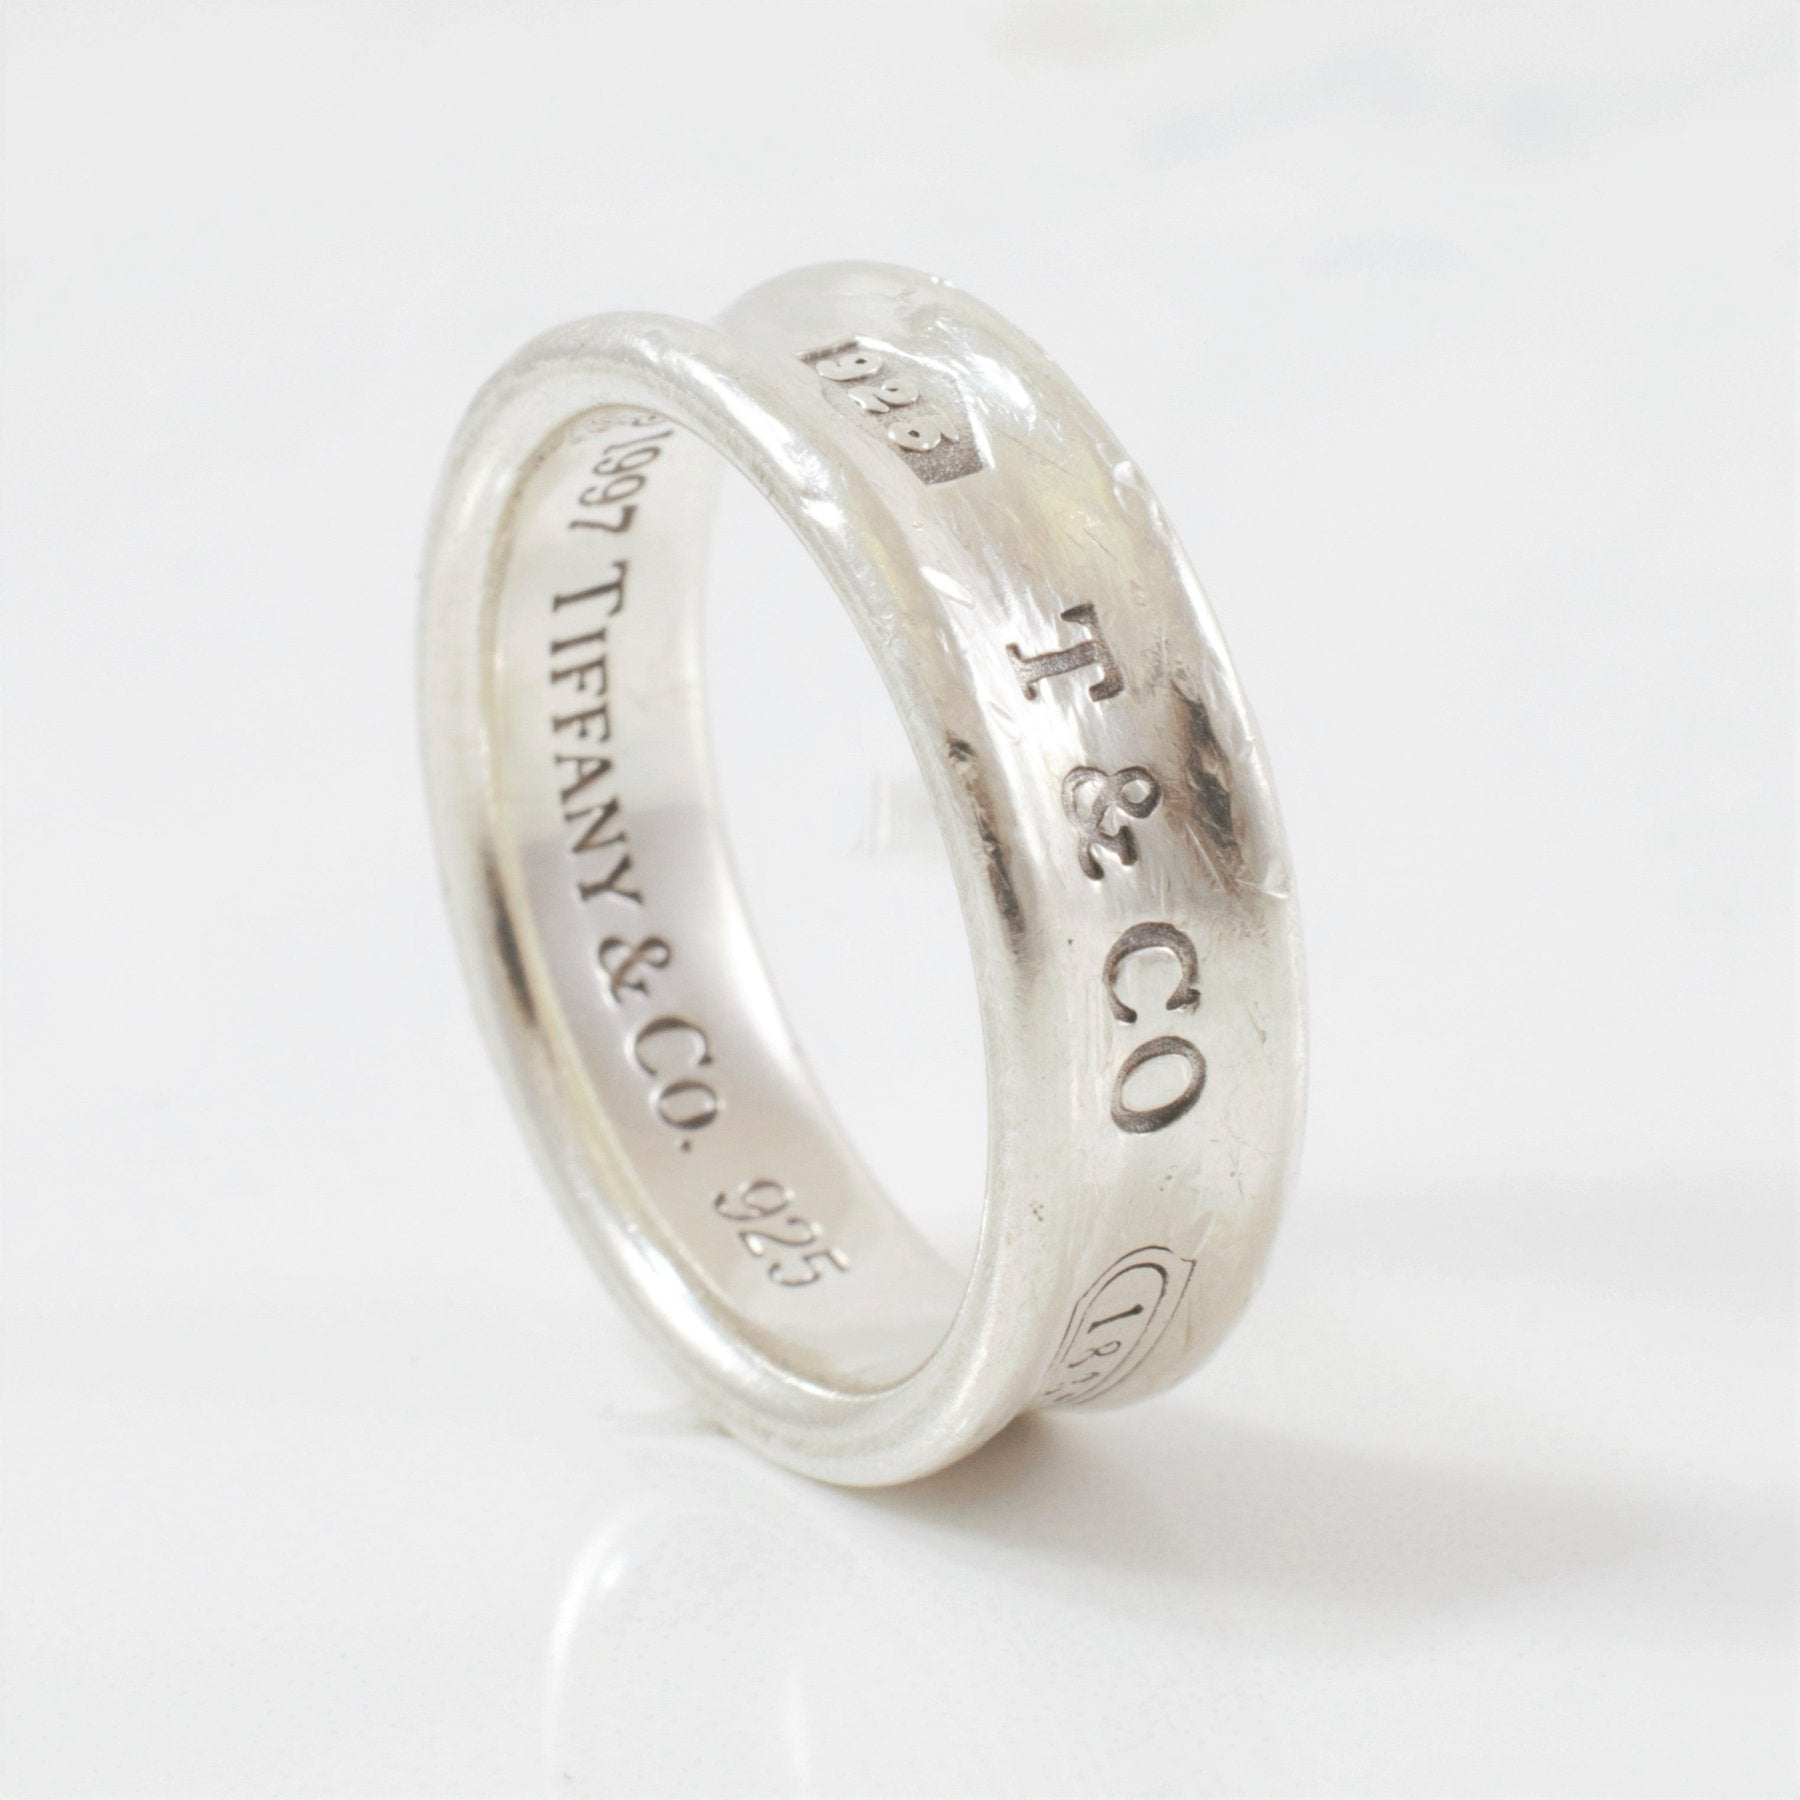 'Tiffany & Co.' 1837 Concave Ring | SZ 10.5 | - 100 Ways